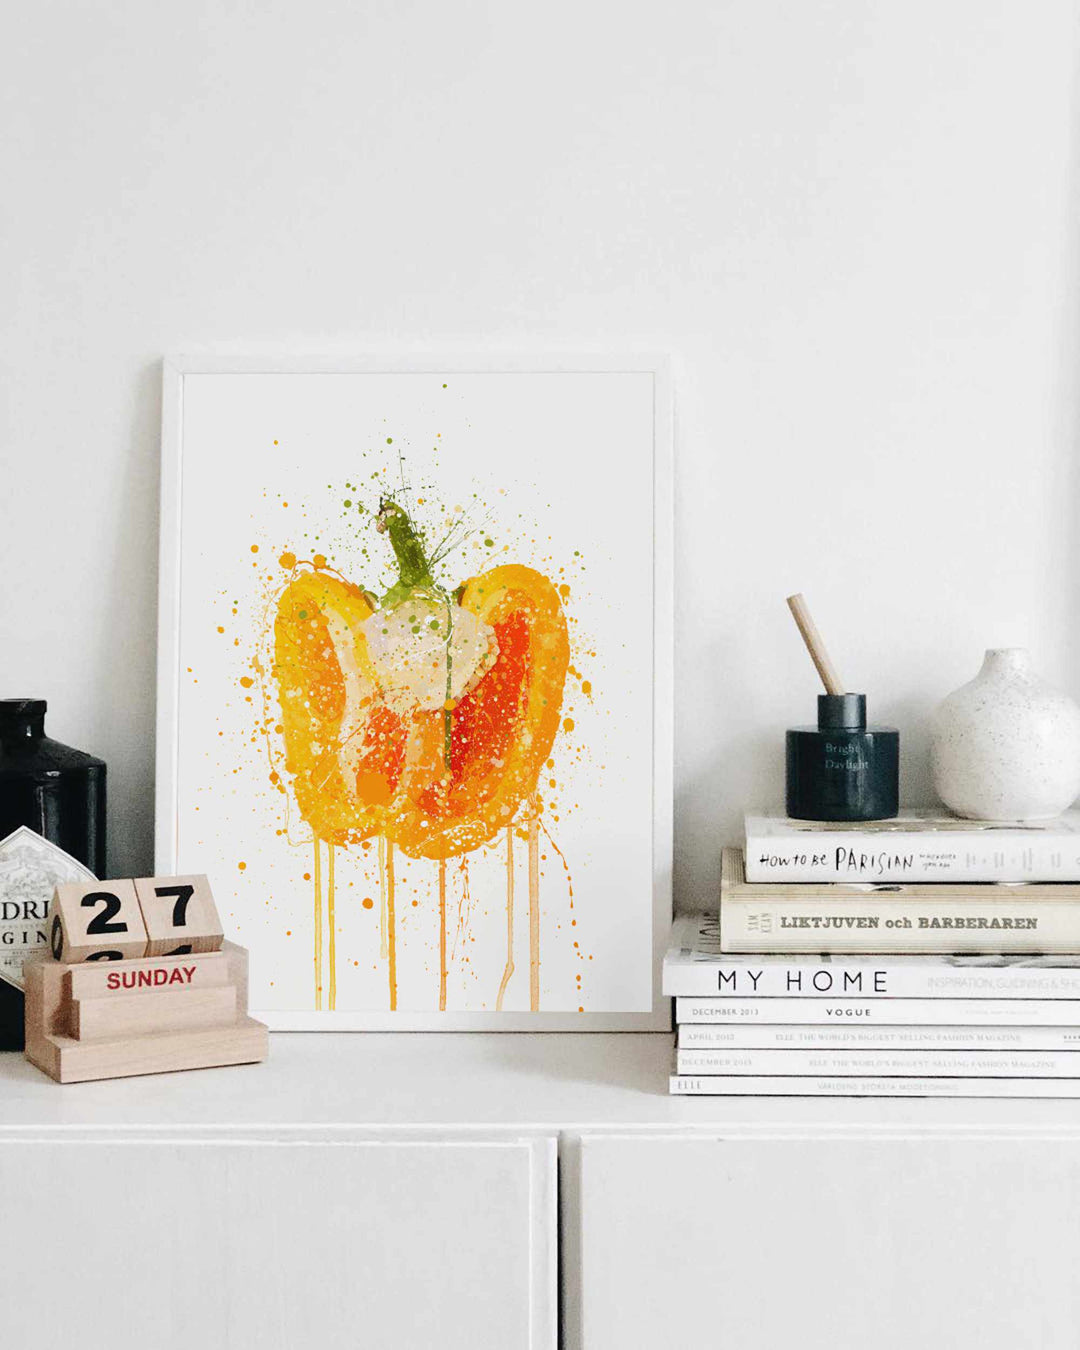 Orange Pepper Vegetable Wall Art Print